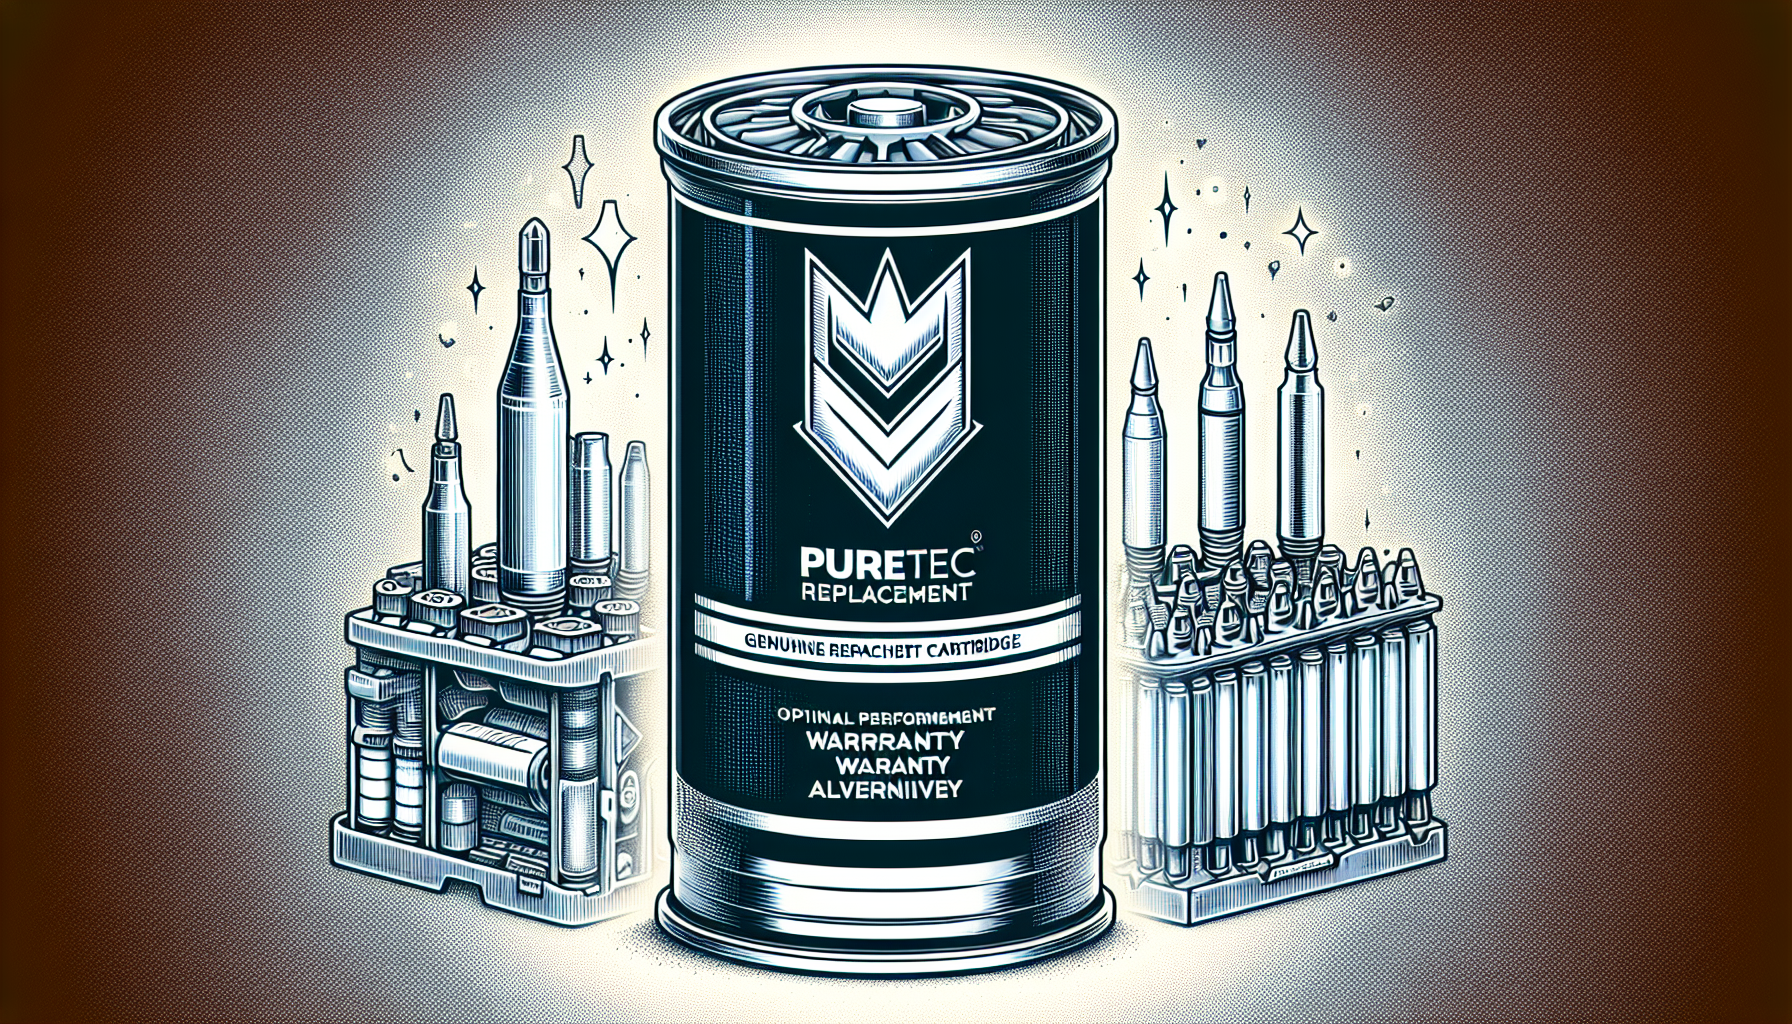 Genuine Puretec replacement cartridges for optimal performance